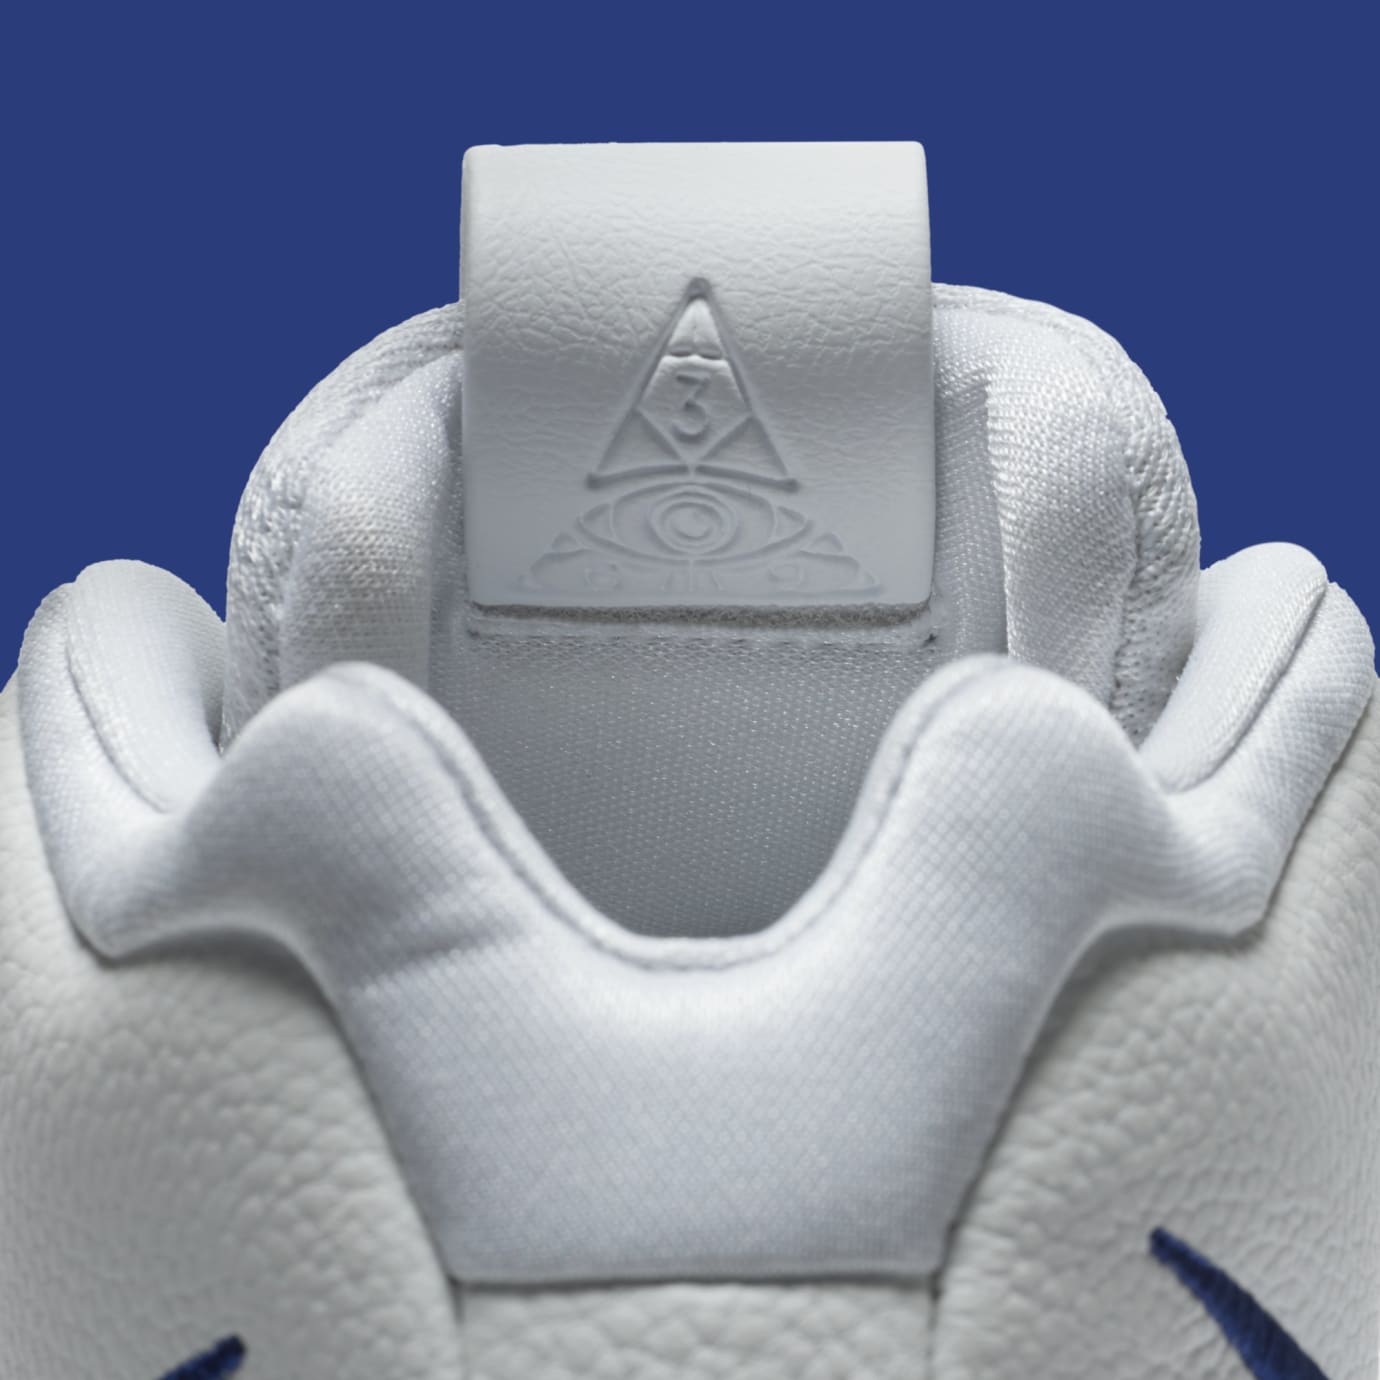 Nike Kyrie 4 'White/Deep Royal Blue' 943806-103 (Detail)